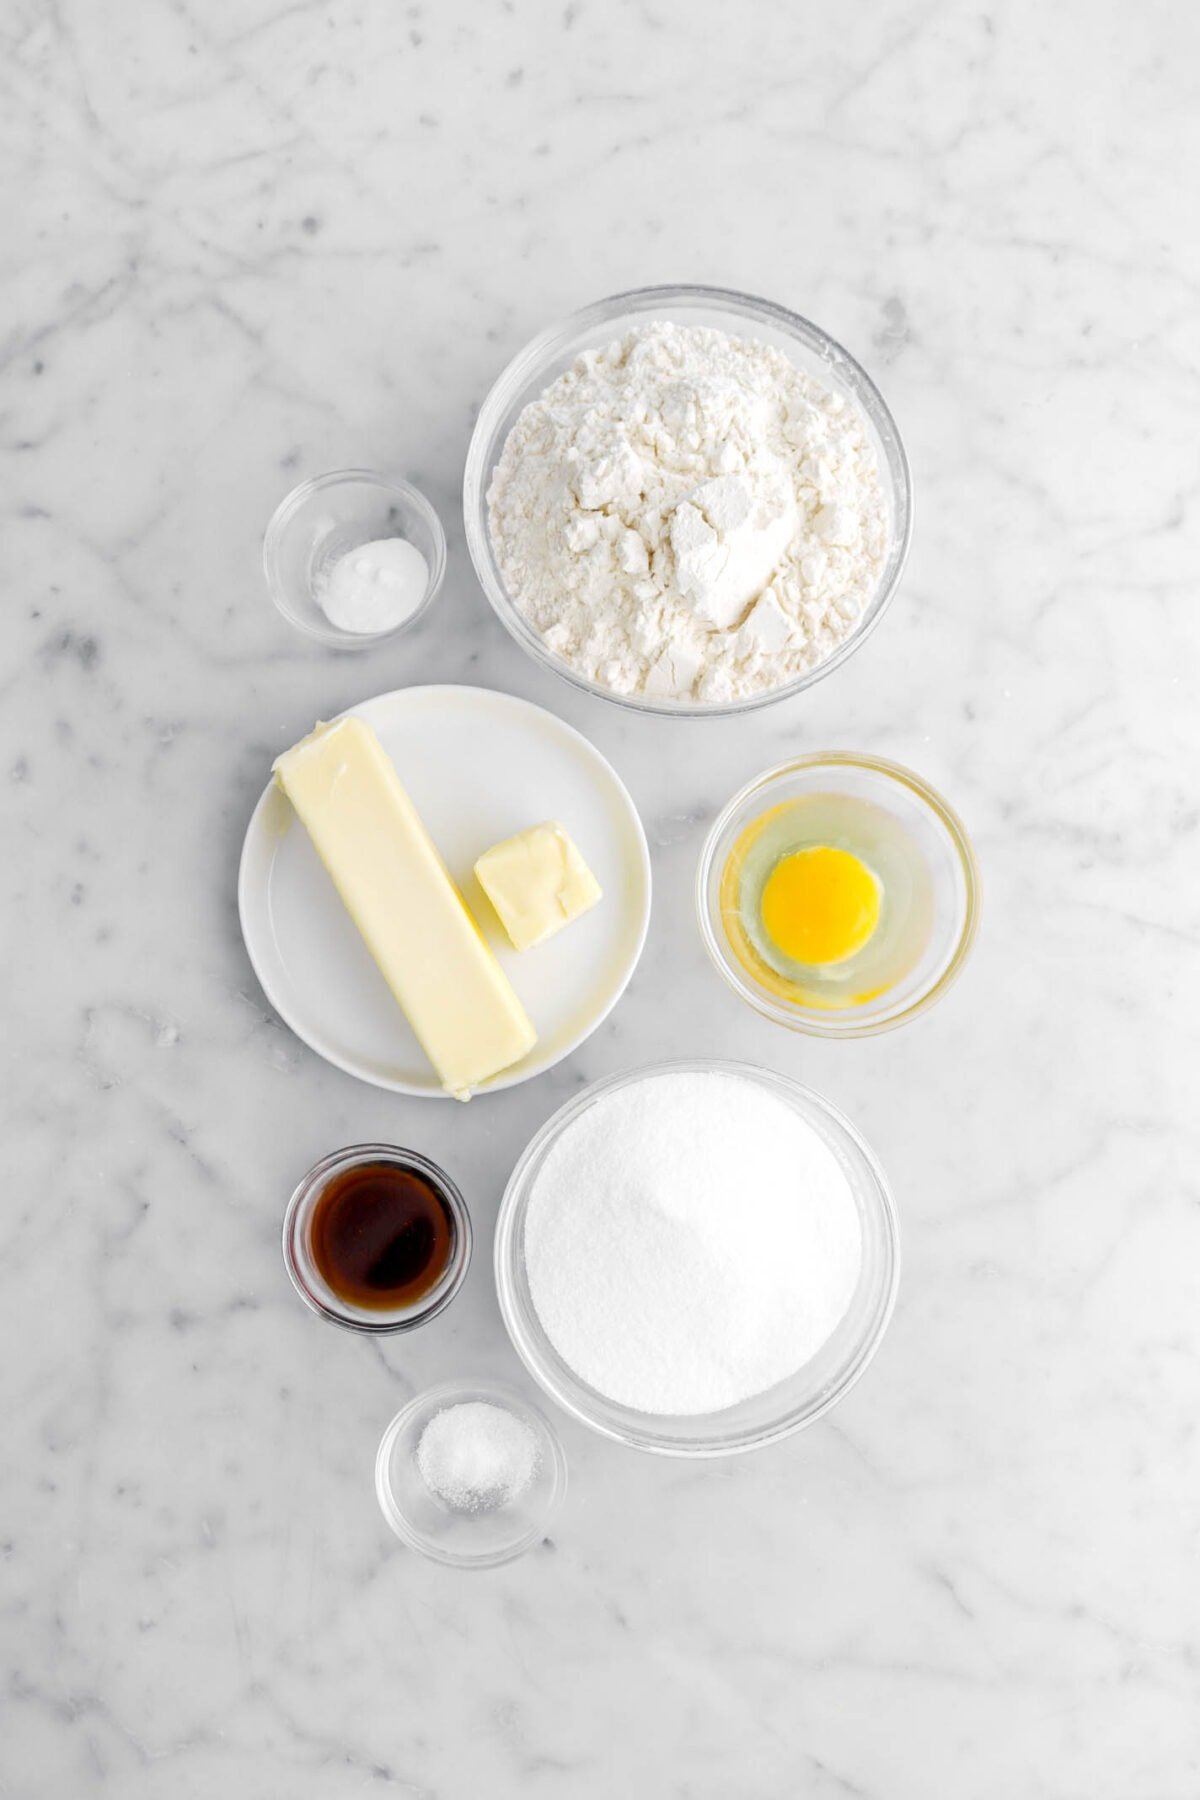 baking soda, flour, butter, egg, vanilla, sugar, and salt on marble surface.